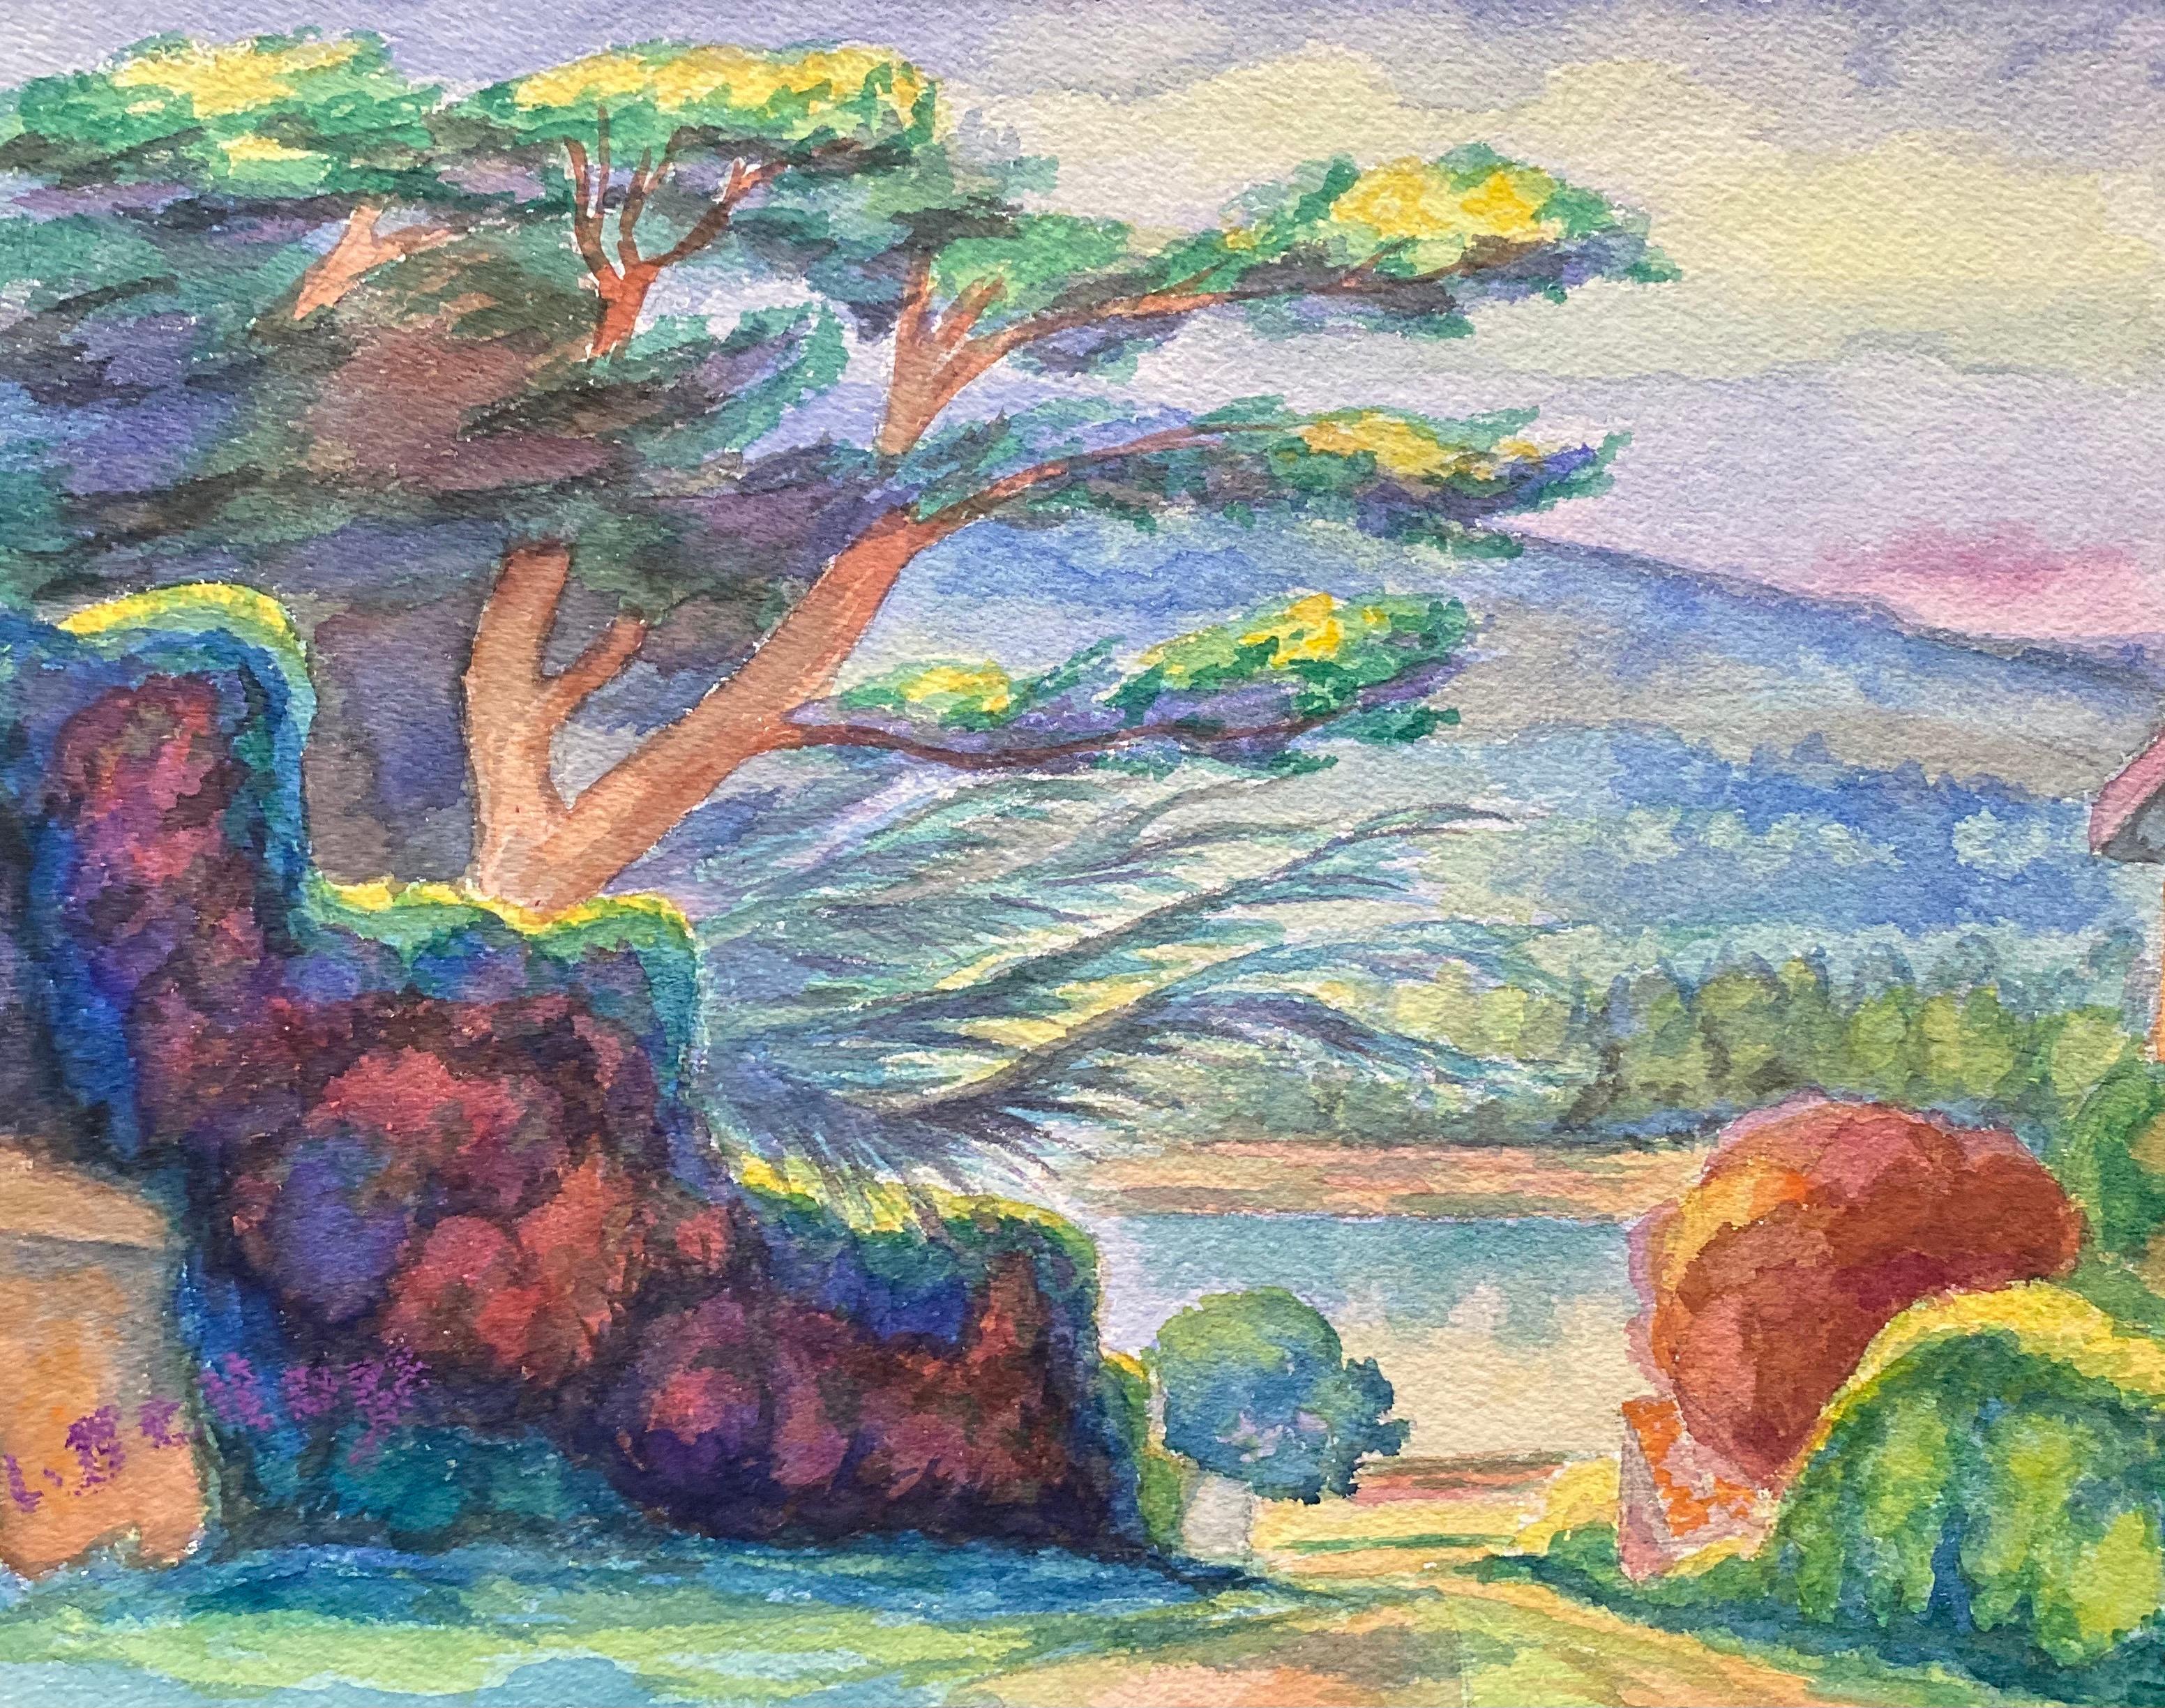 1940er Jahre Provence-Gemälde, lebhafte Baumlandschaft  - Postimpressionistischer Künstler